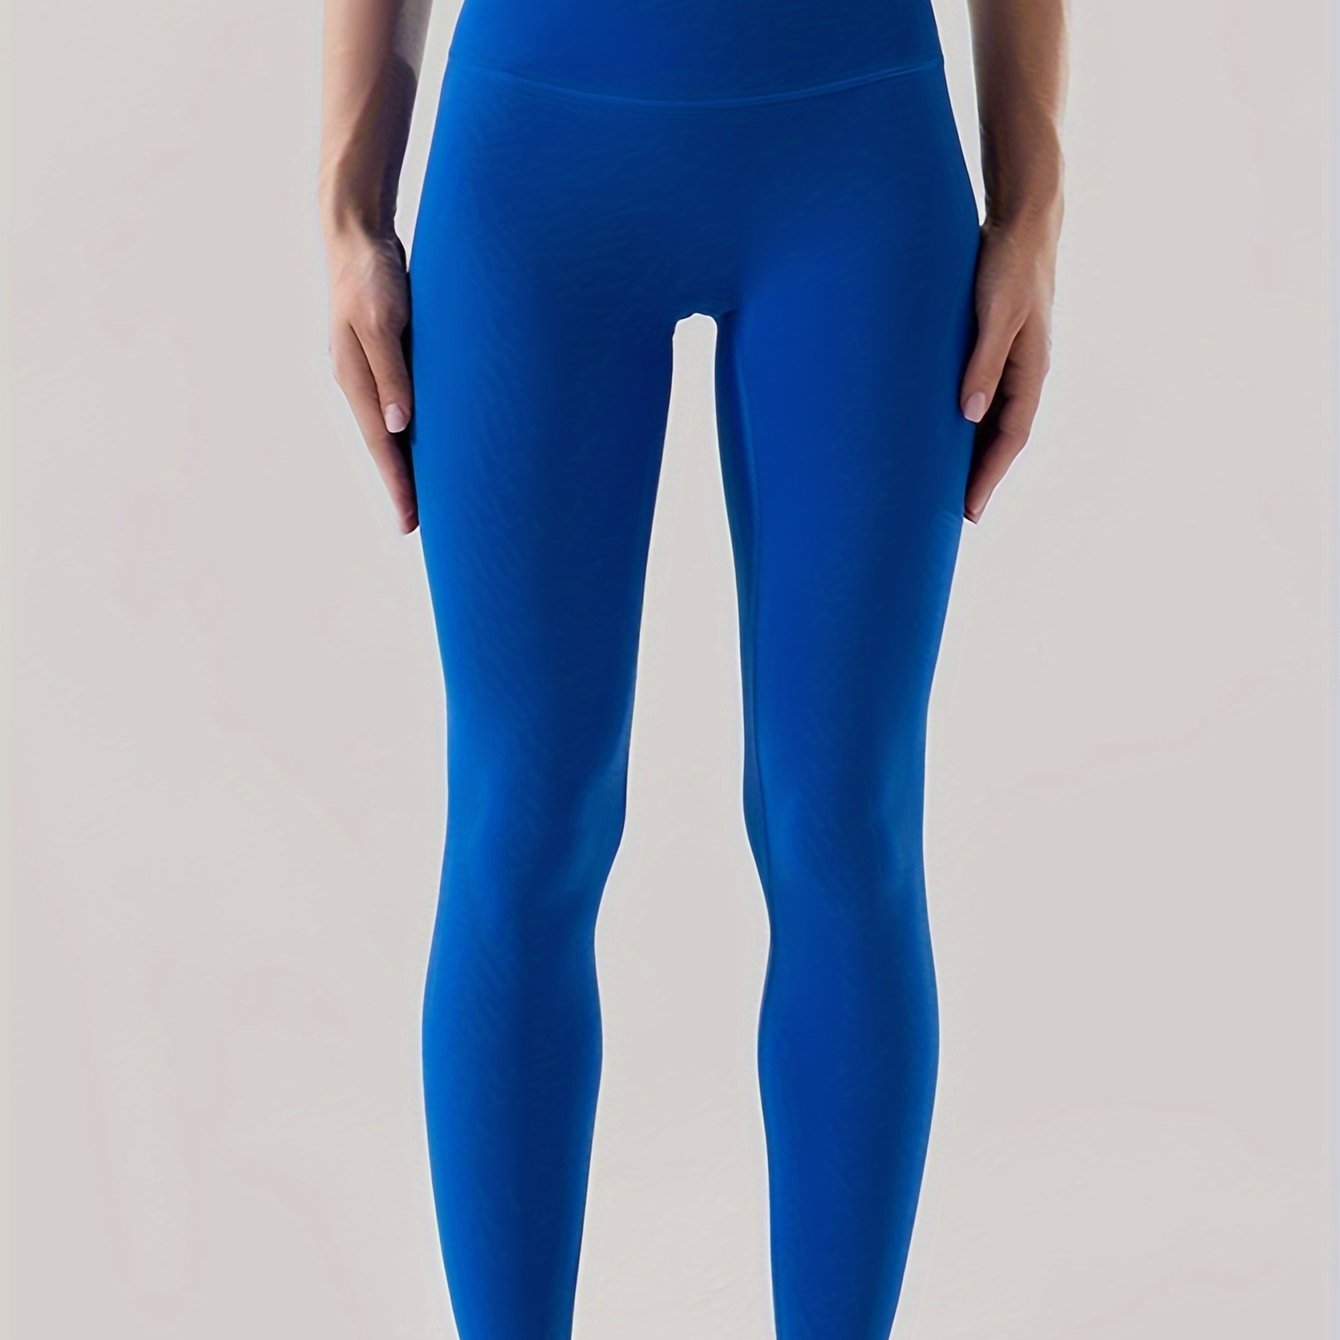 Buy Lululemon Wunder Under Yoga Pants High-Rise (Sapphire Blue, 4